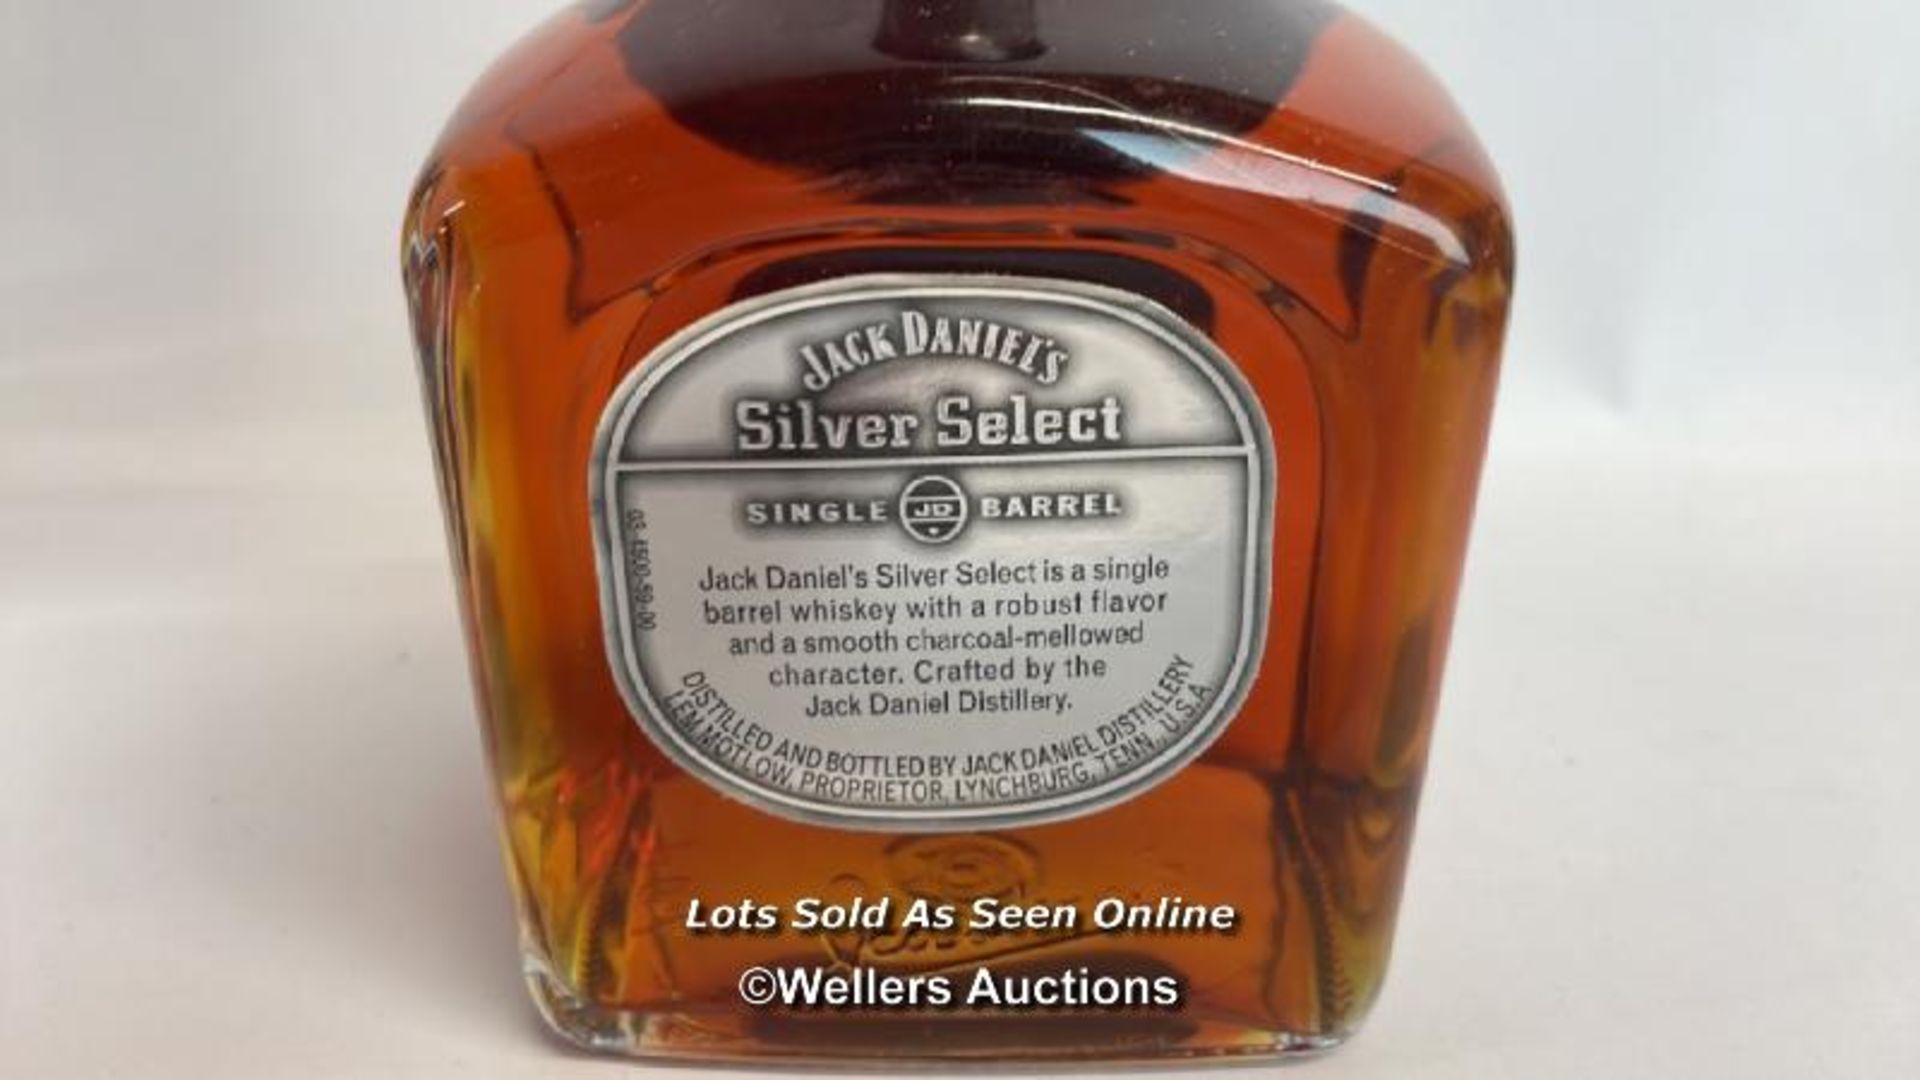 Jack Daniels Silver Select Single Barrel Tennessee Whiskey, Release date: 11-03-99, Barrek no: 9- - Image 7 of 8